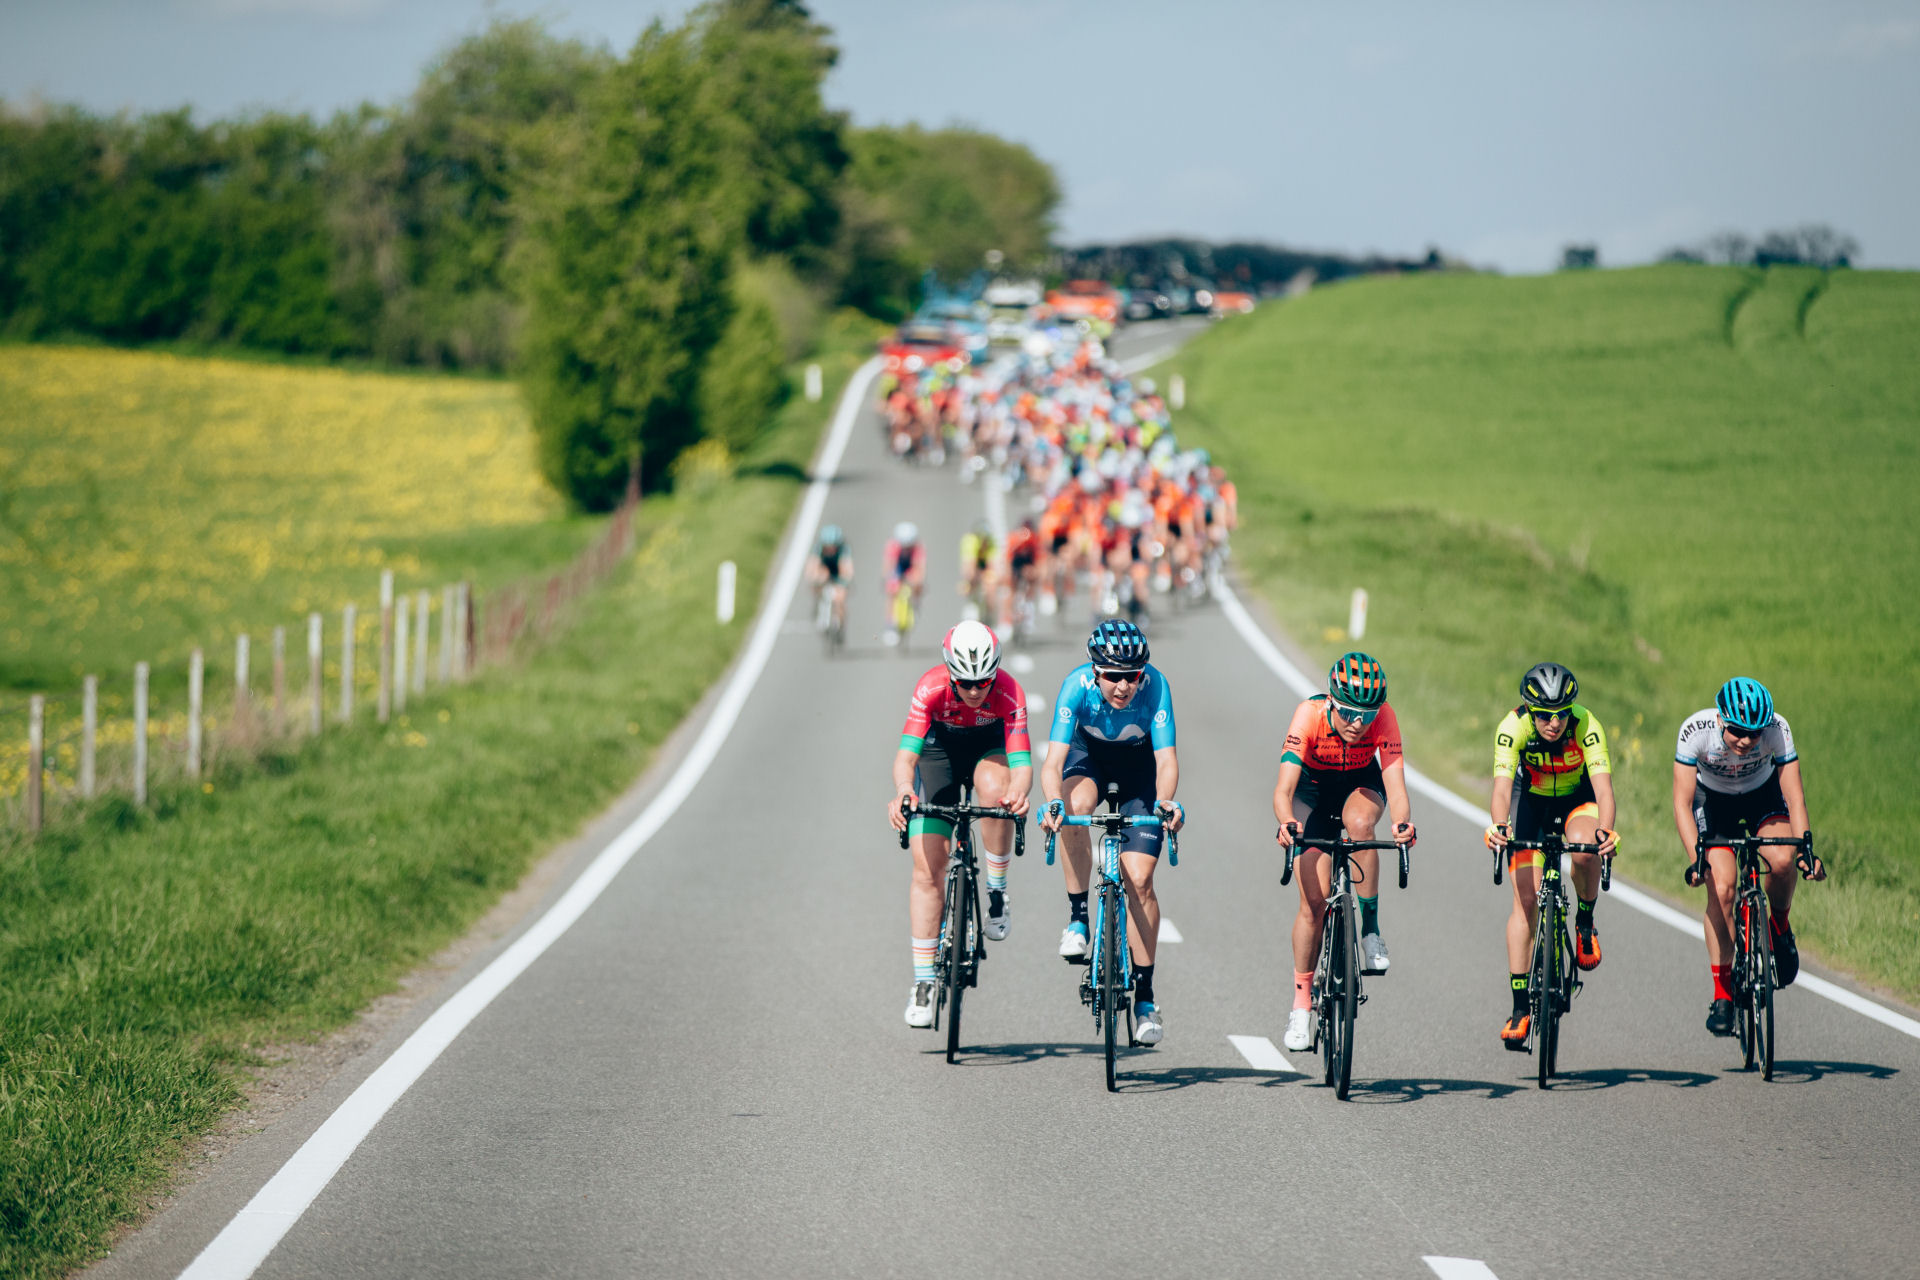 La Flèche Wallonne i Liège-Bastogne-Liège kobiet poza UCI Women’s WorldTour